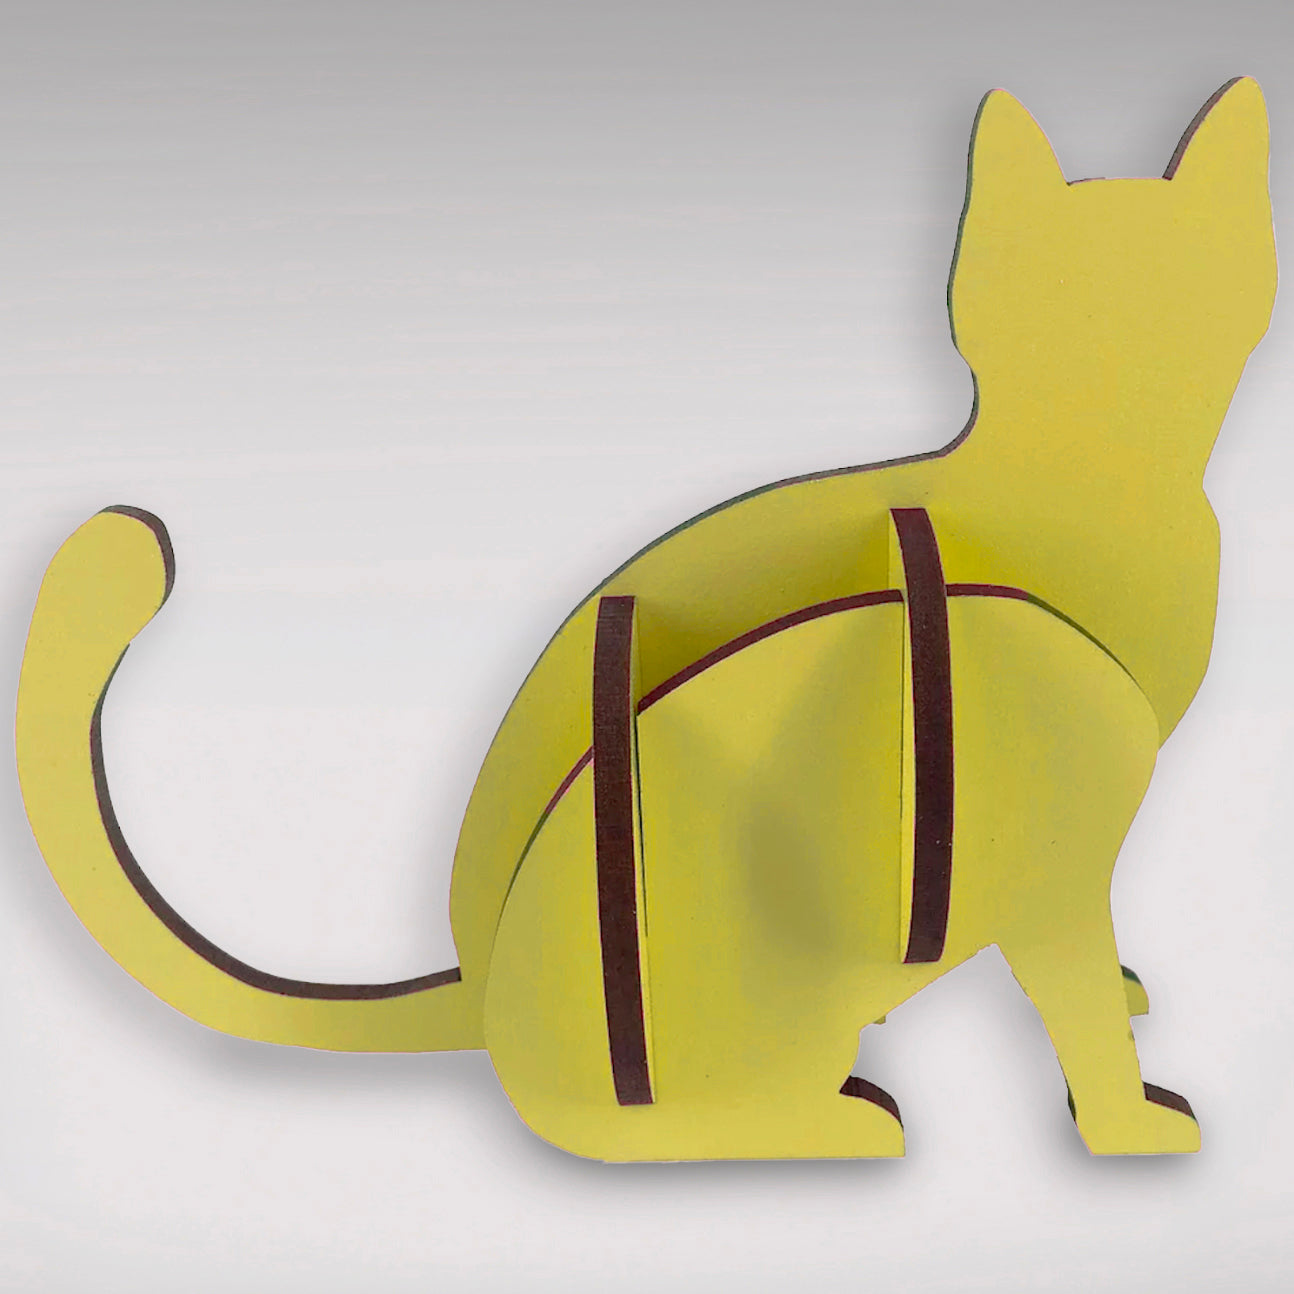 Flat-pack Kitset Wooden Model - Cat Sitting - Yellow